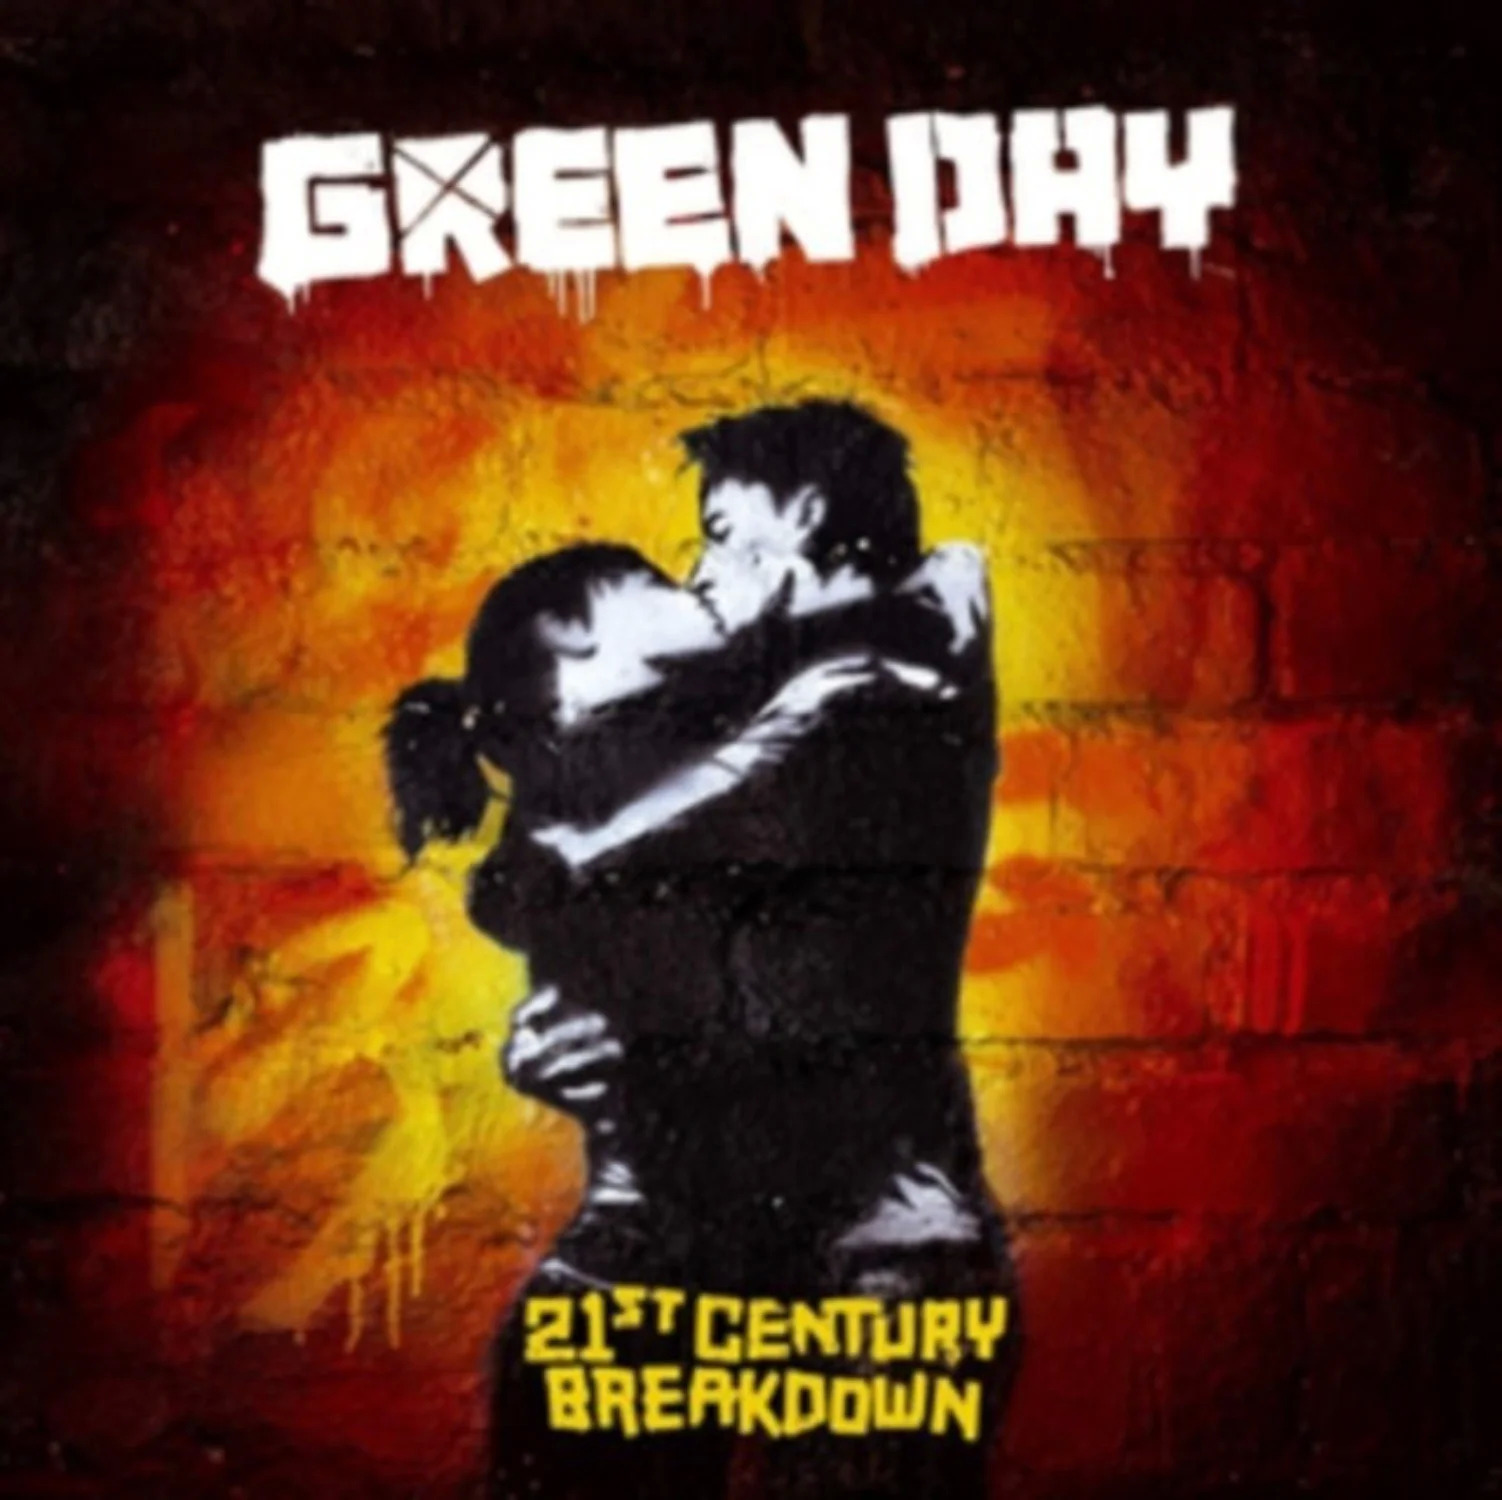 Green Day - 21st Century Breakdown - Punk Rock - Vinyl $19.99 @ Walmart